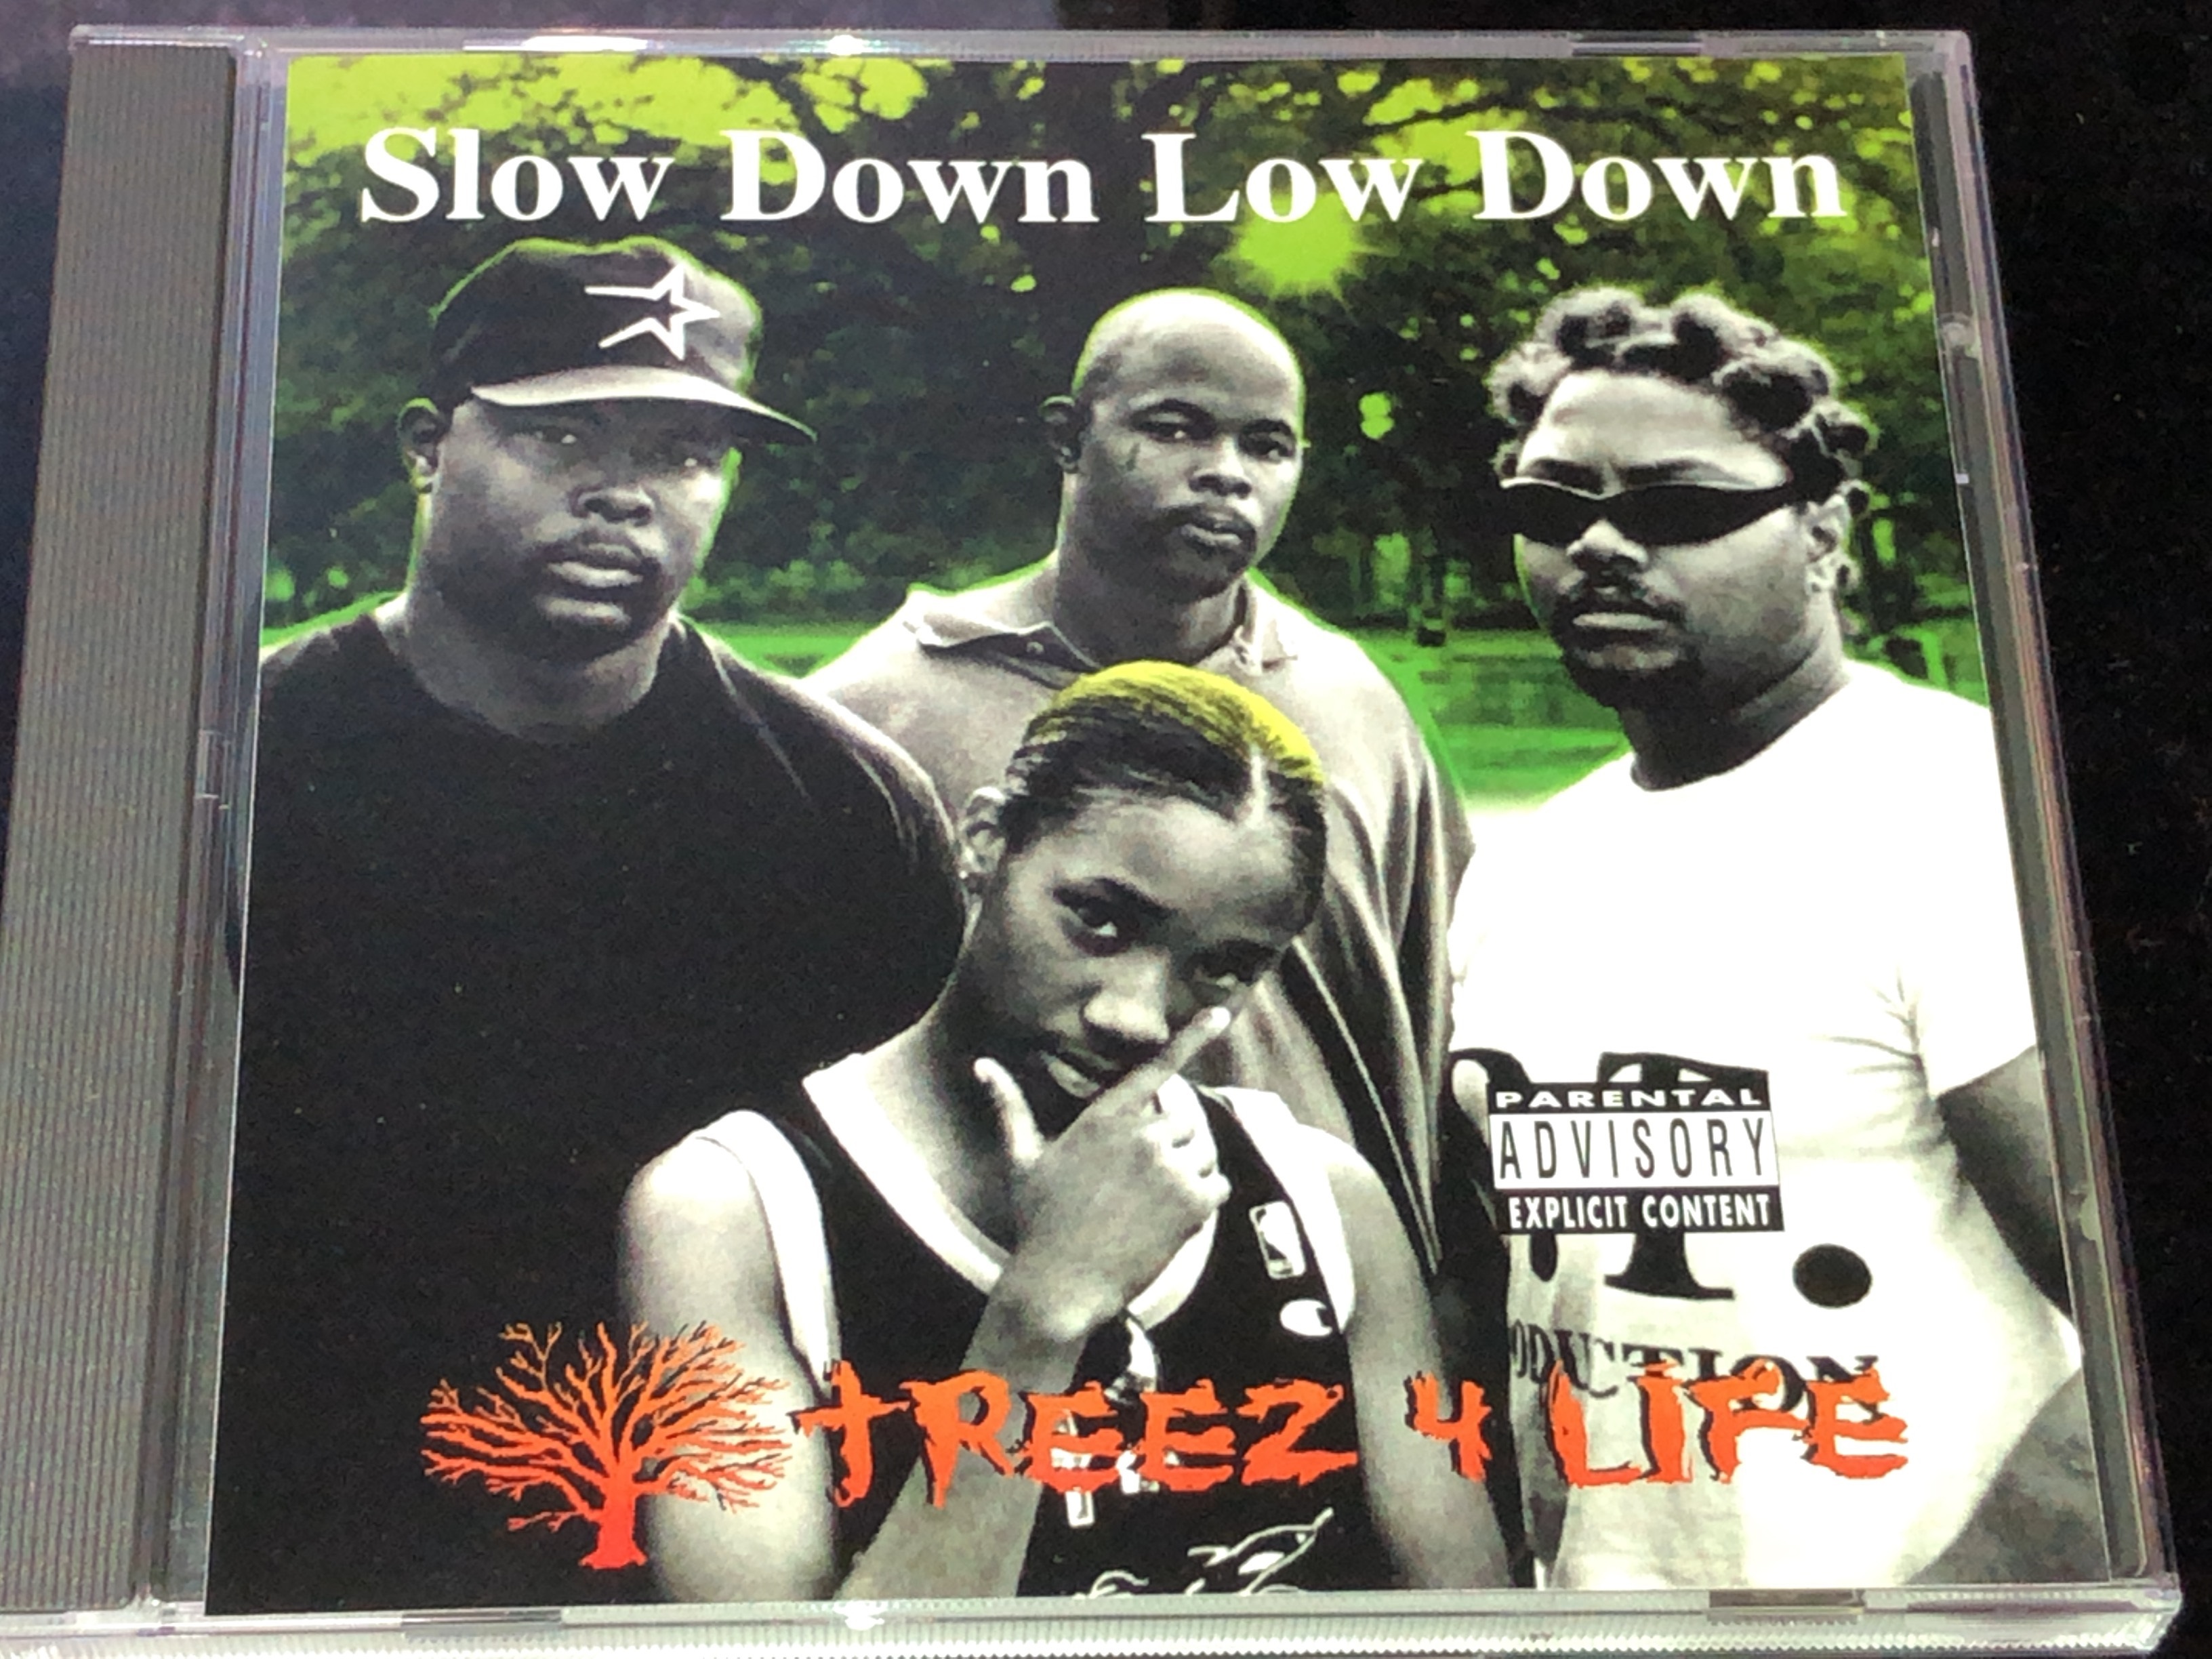 g rap. Treez 4 life / Slow Down Low Down